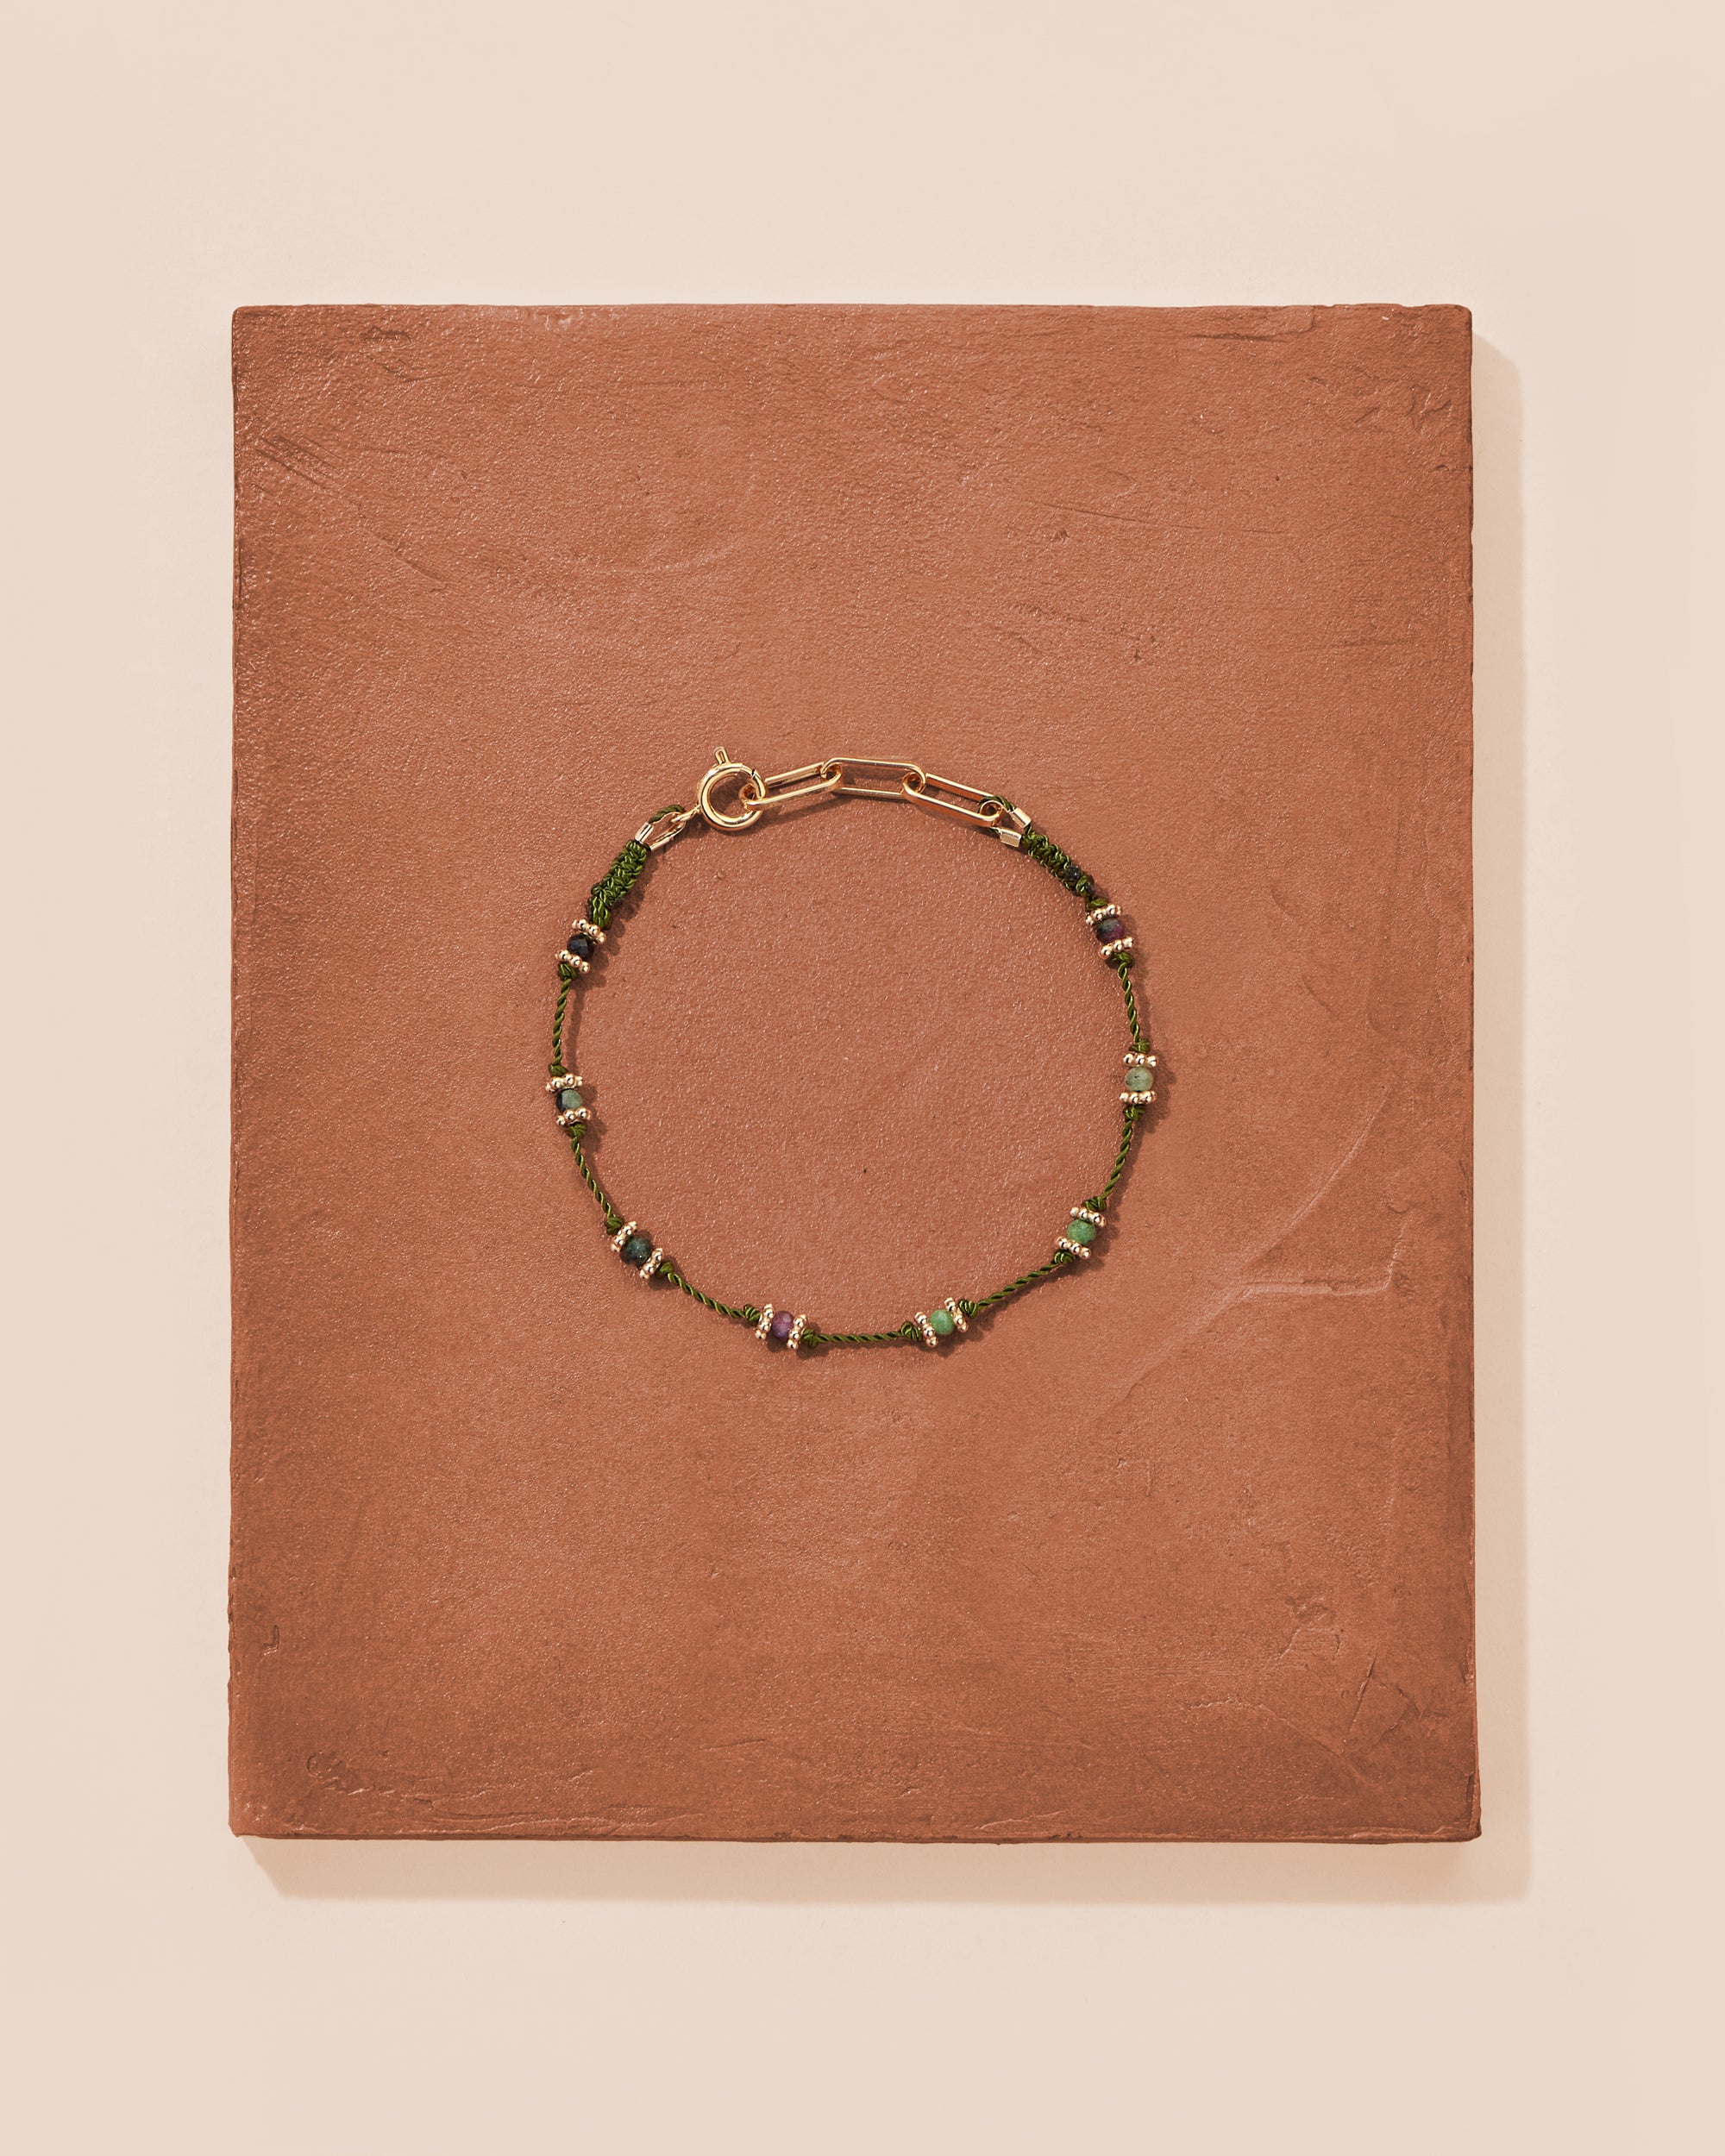 Lotus bracelet - All versions